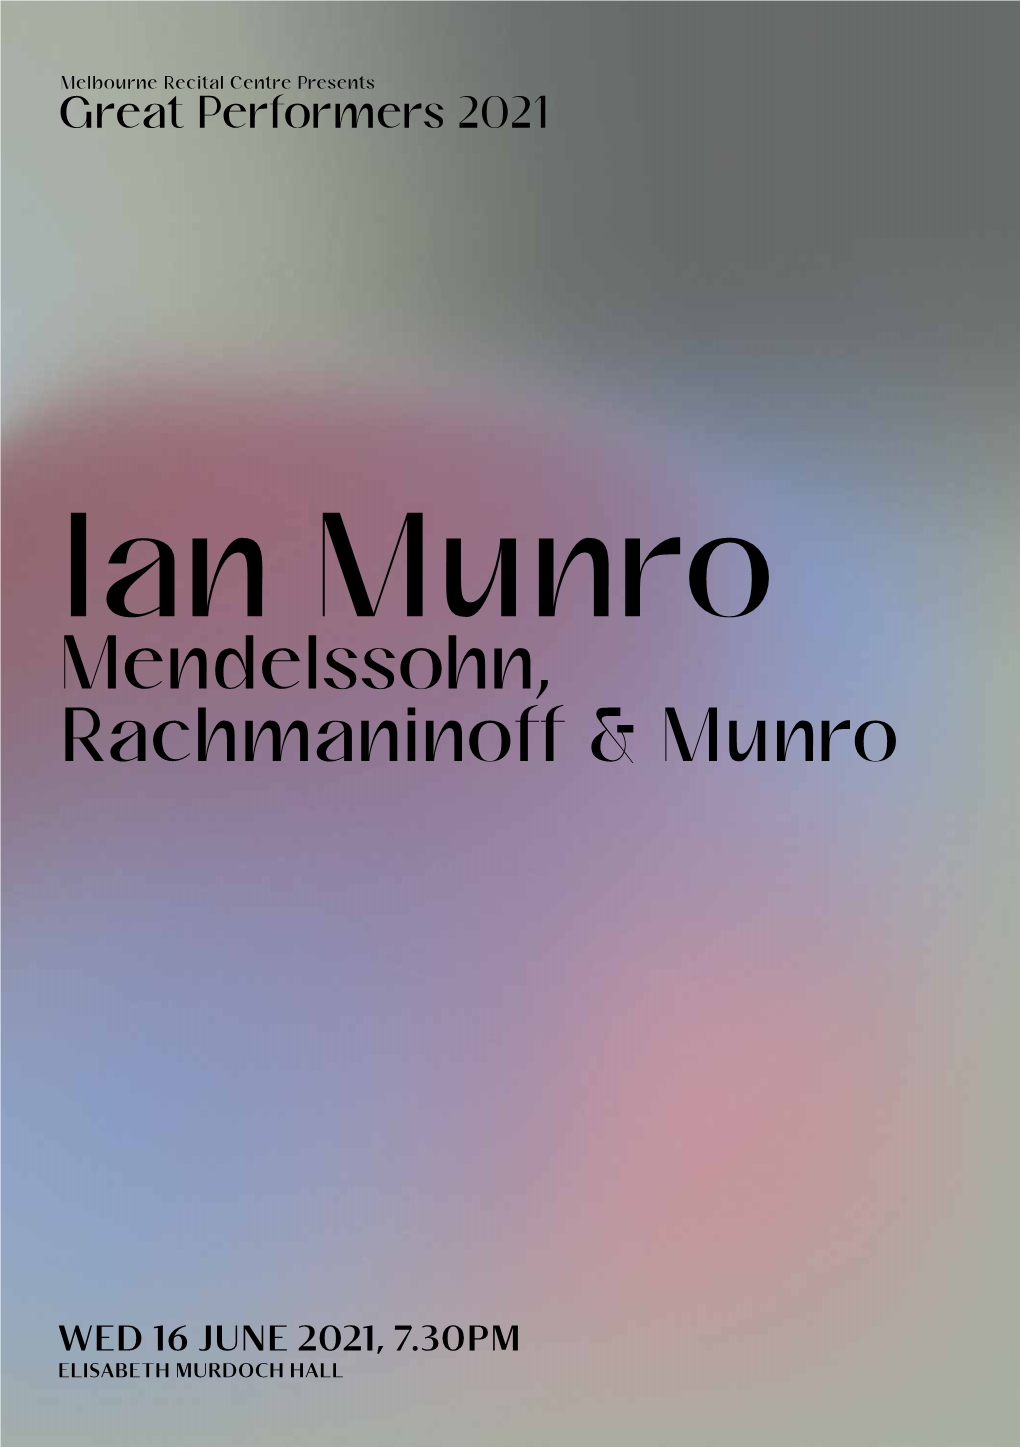 Ian Munro Mendelssohn, Rachmaninoff & Munro